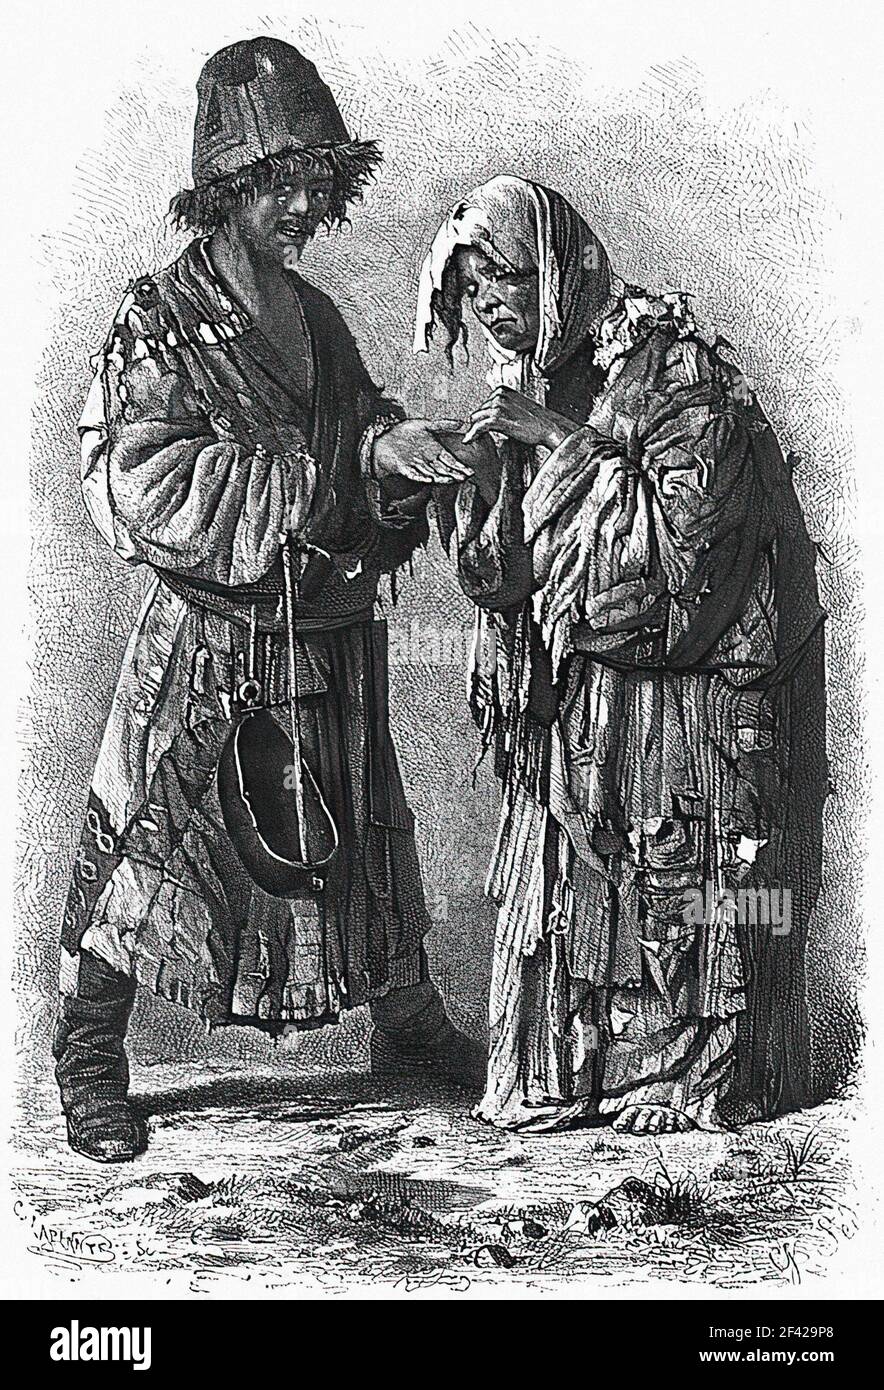 Vasily Vereshchagin - Douvan Begging Dervishes 1873 Stock Photo